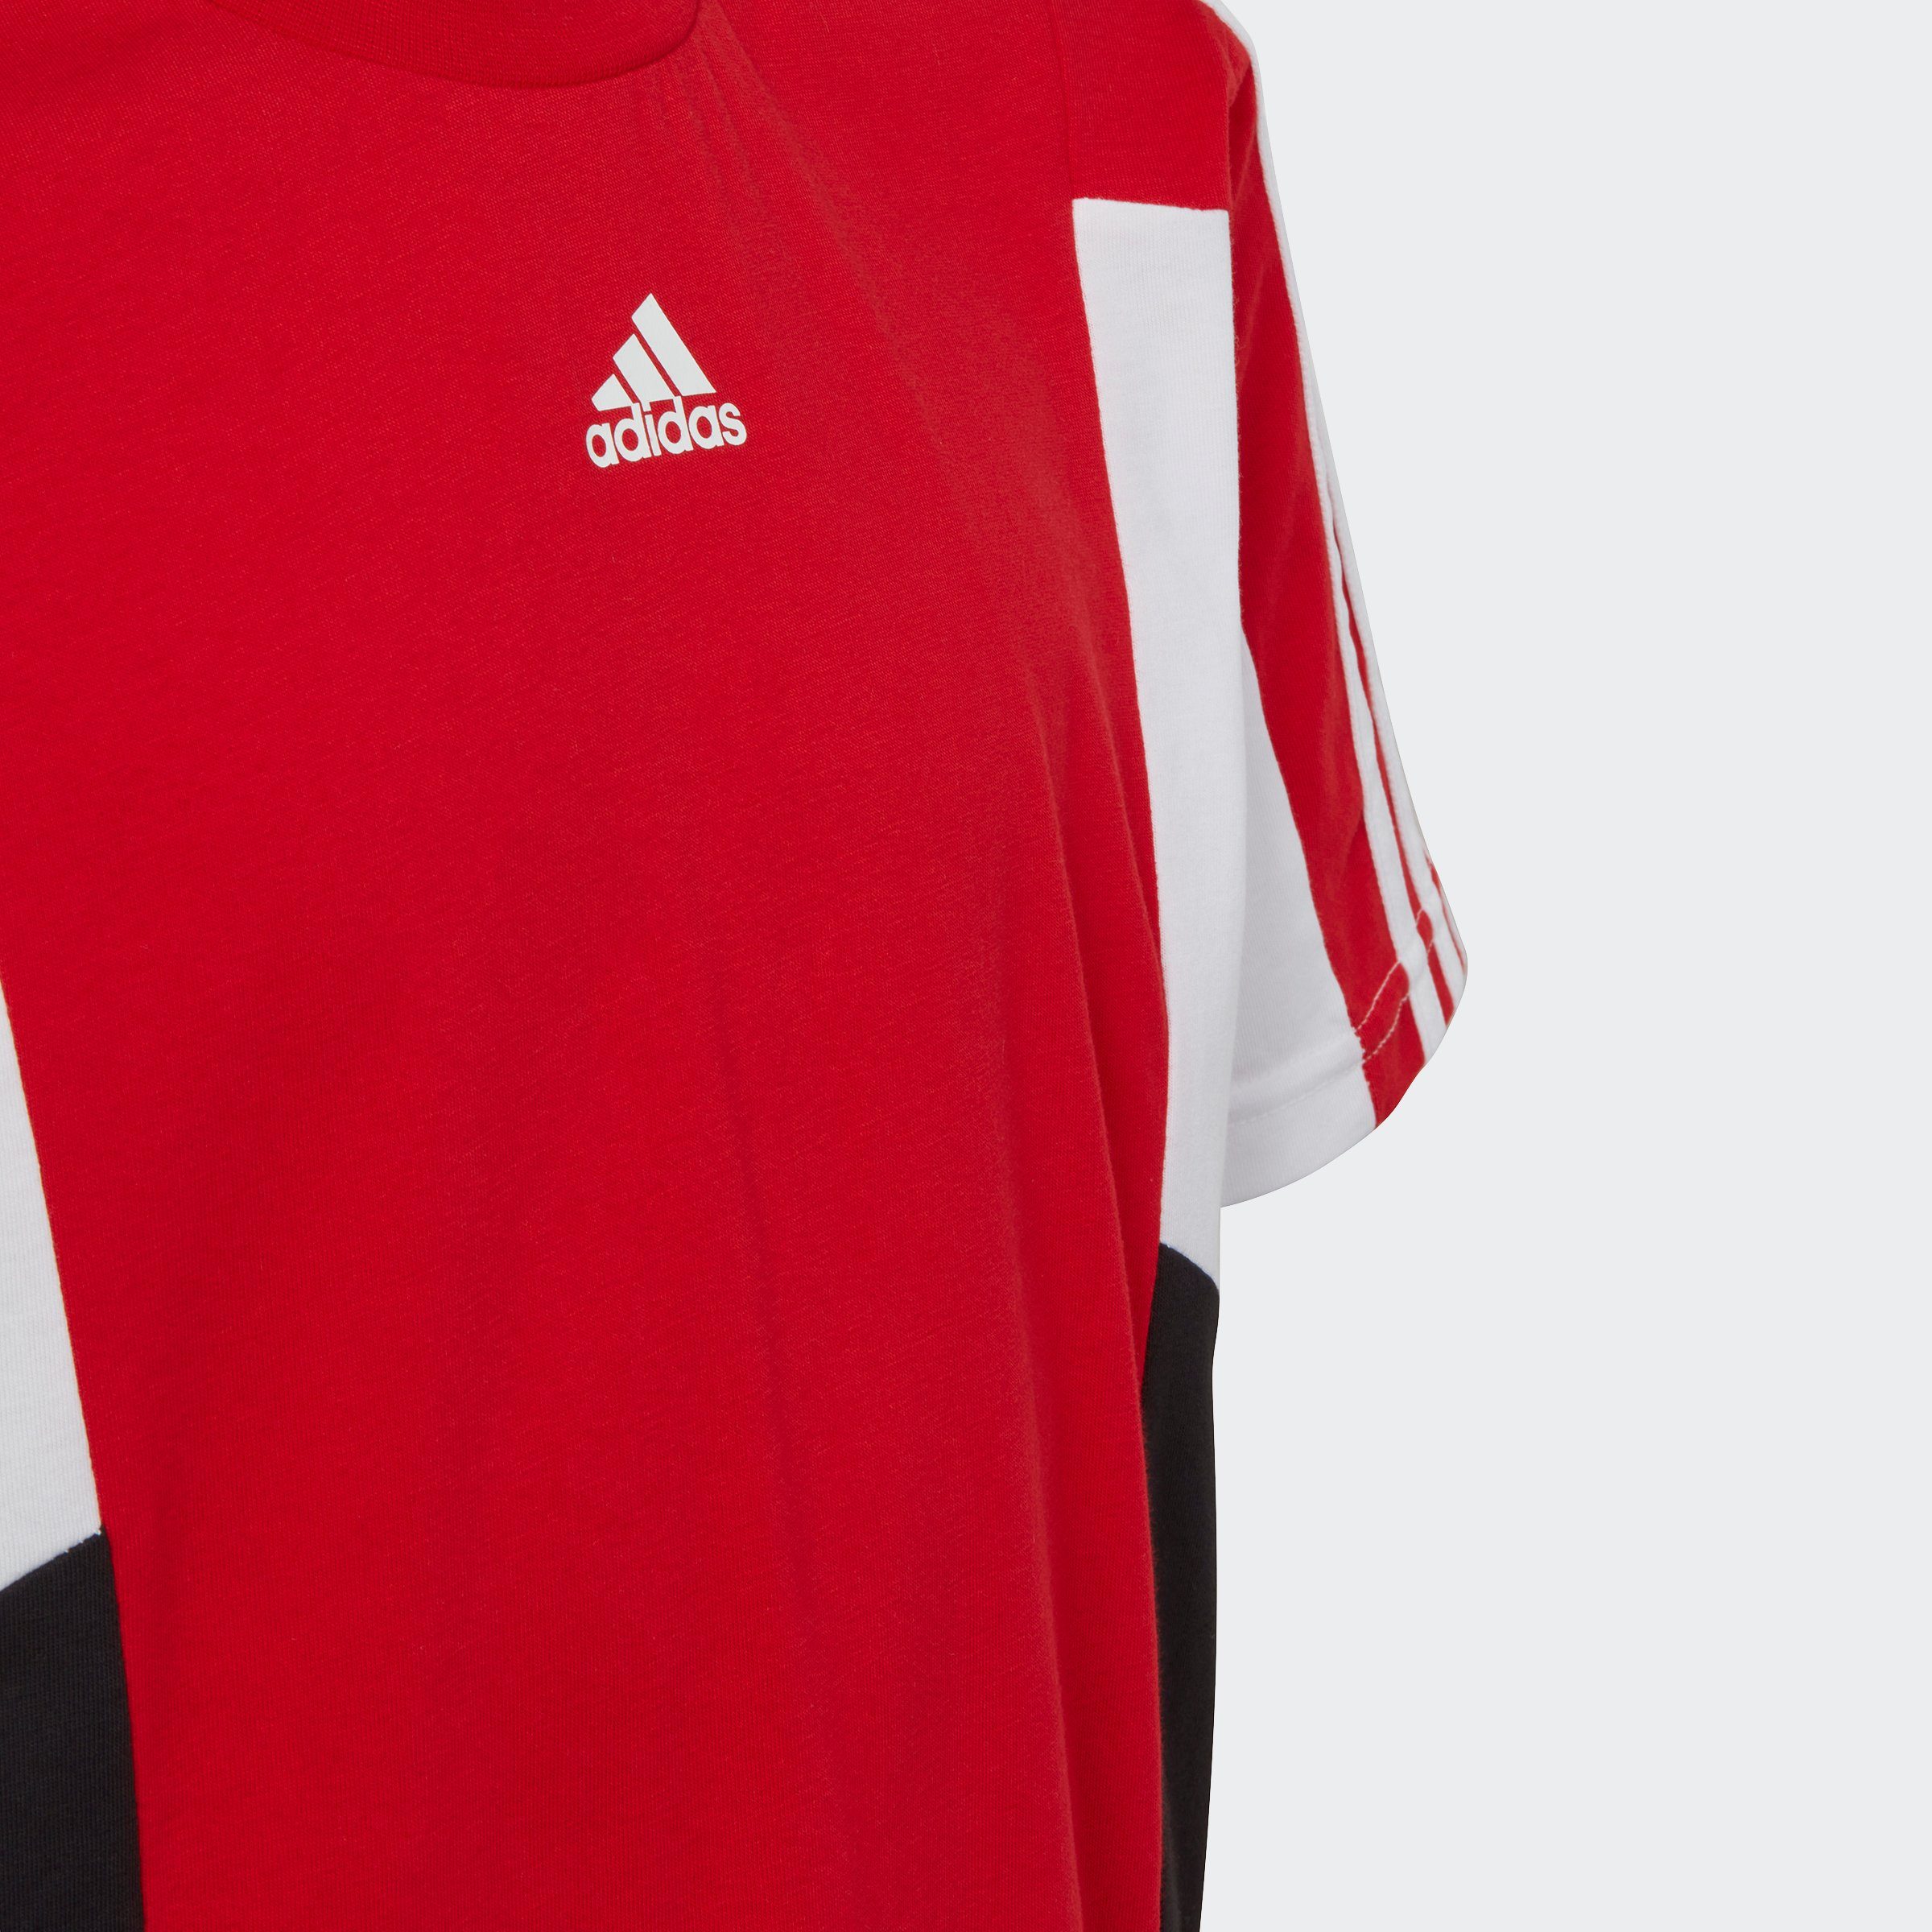 adidas Sportswear T-Shirt 3-STREIFEN / / Black Better White Scarlet FIT COLORBLOCK REGULAR